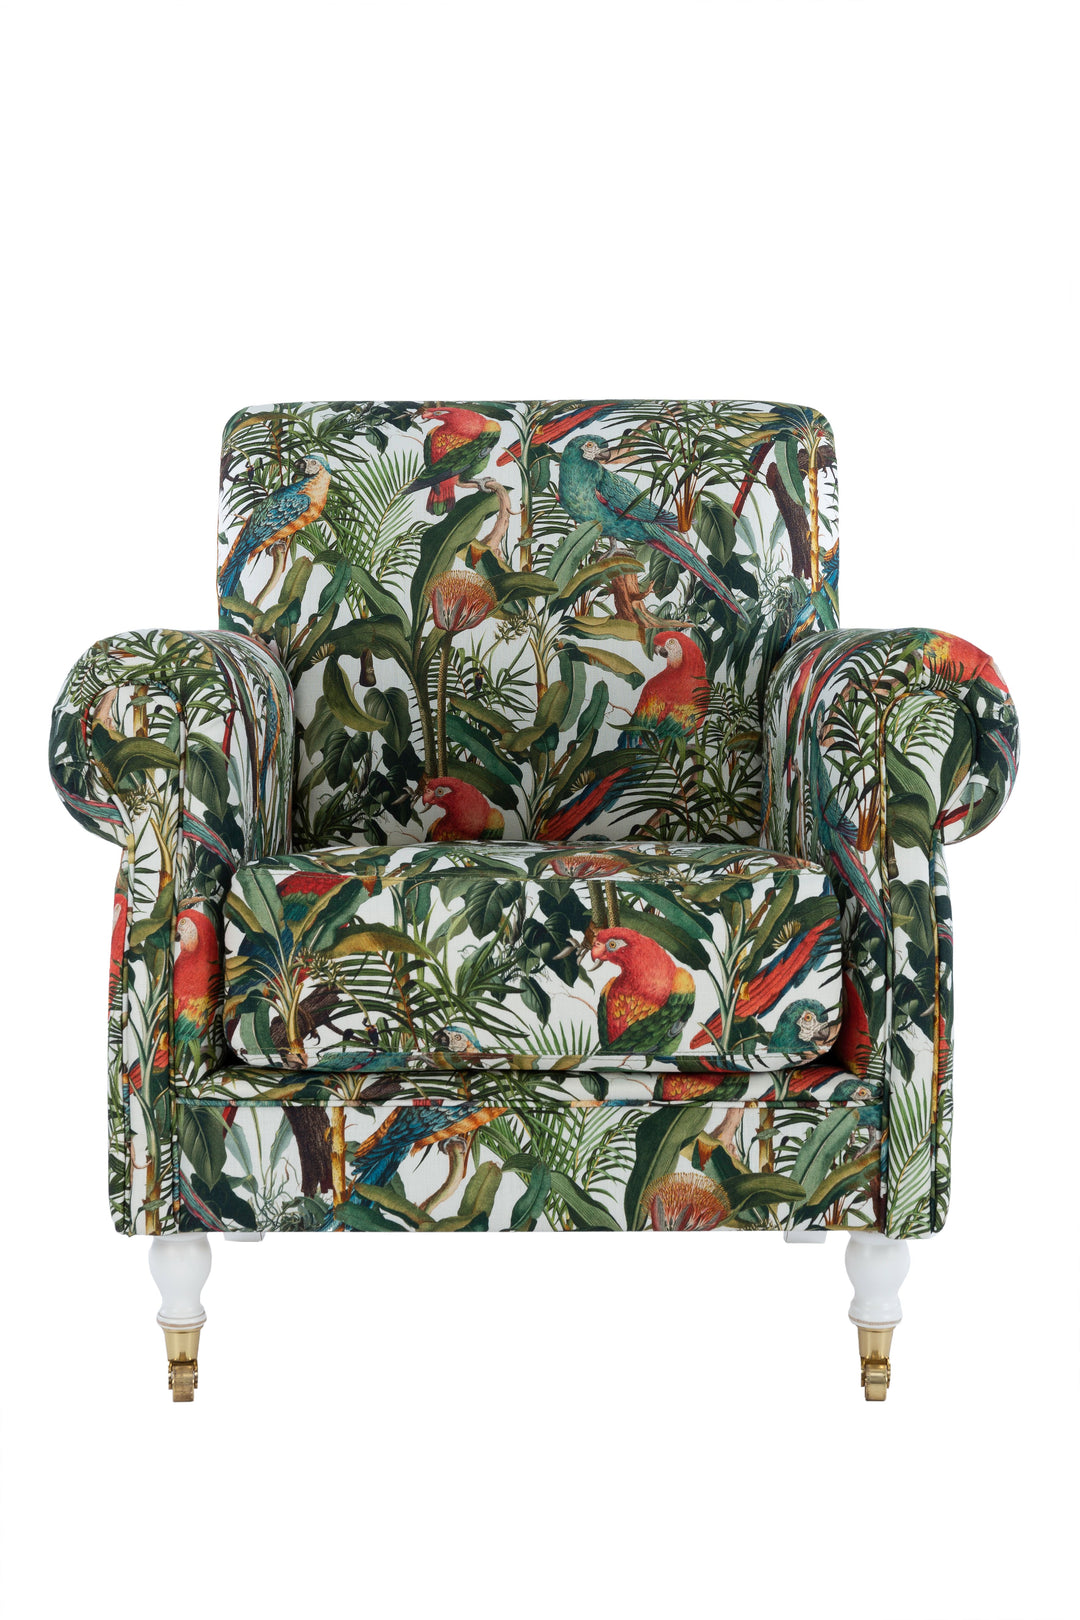 mind-the-gap-tropical-linens-parrots-of-brazil-linen-fabric-chair